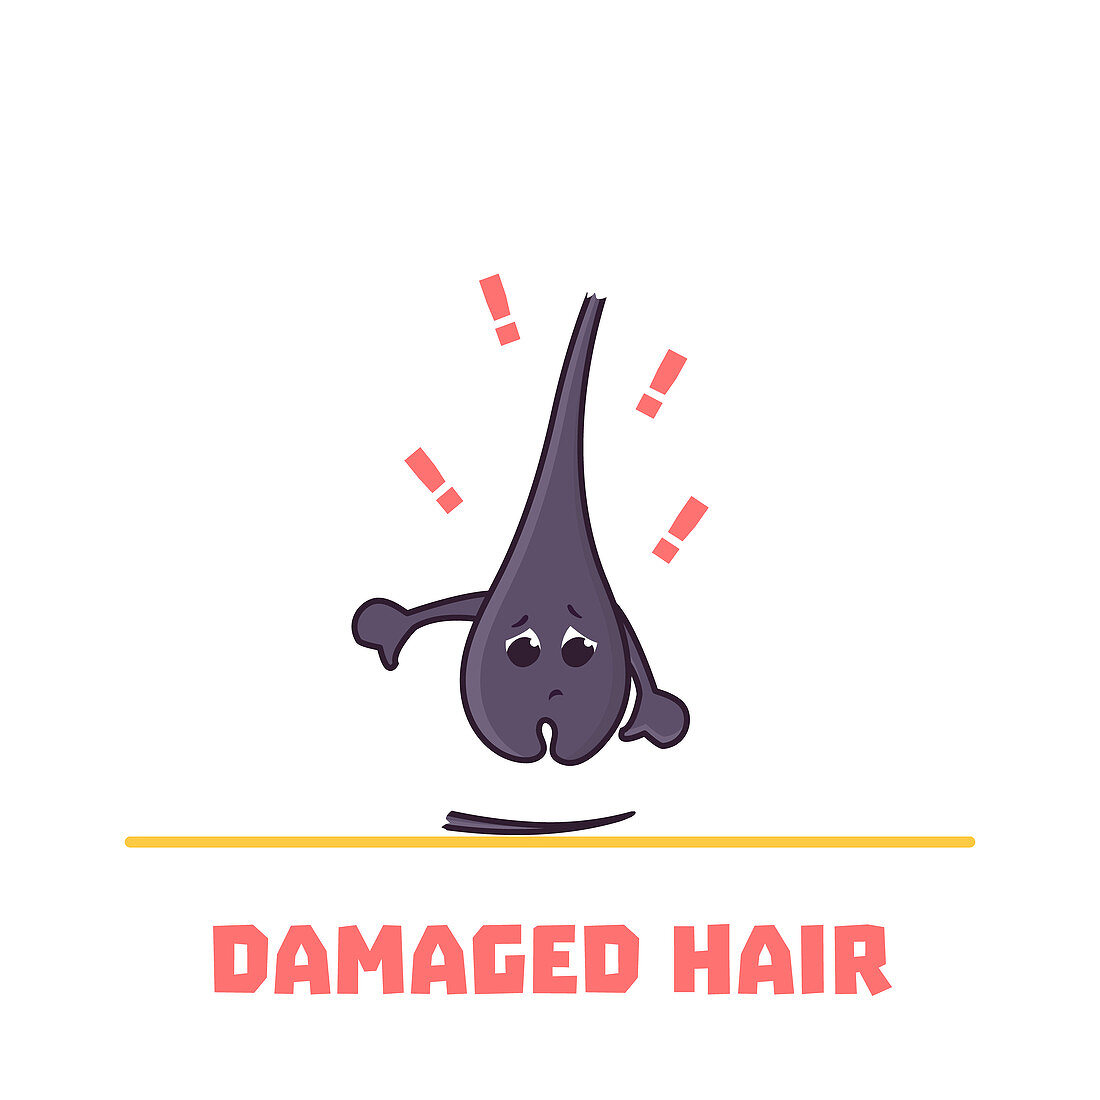 Damaged hair, conceptual illustration